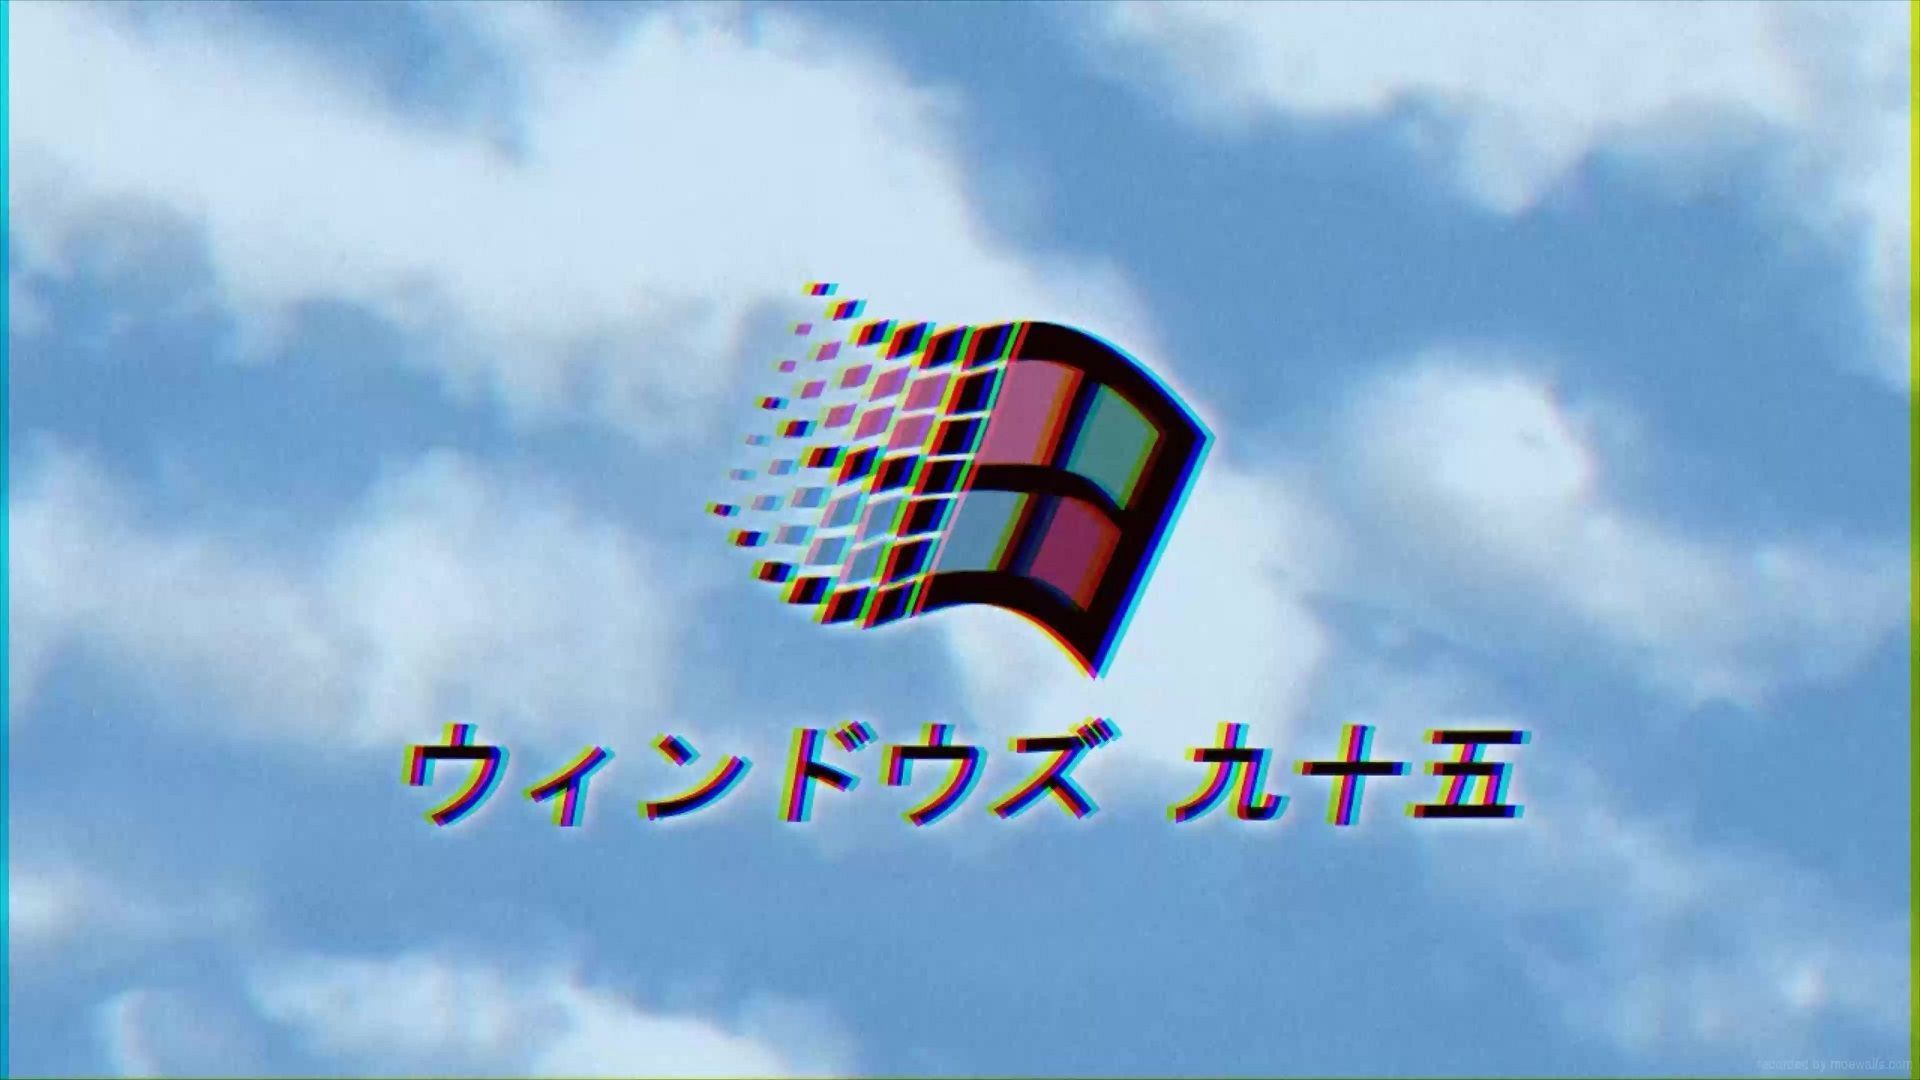 Windows 95 Japan Live Wallpaper